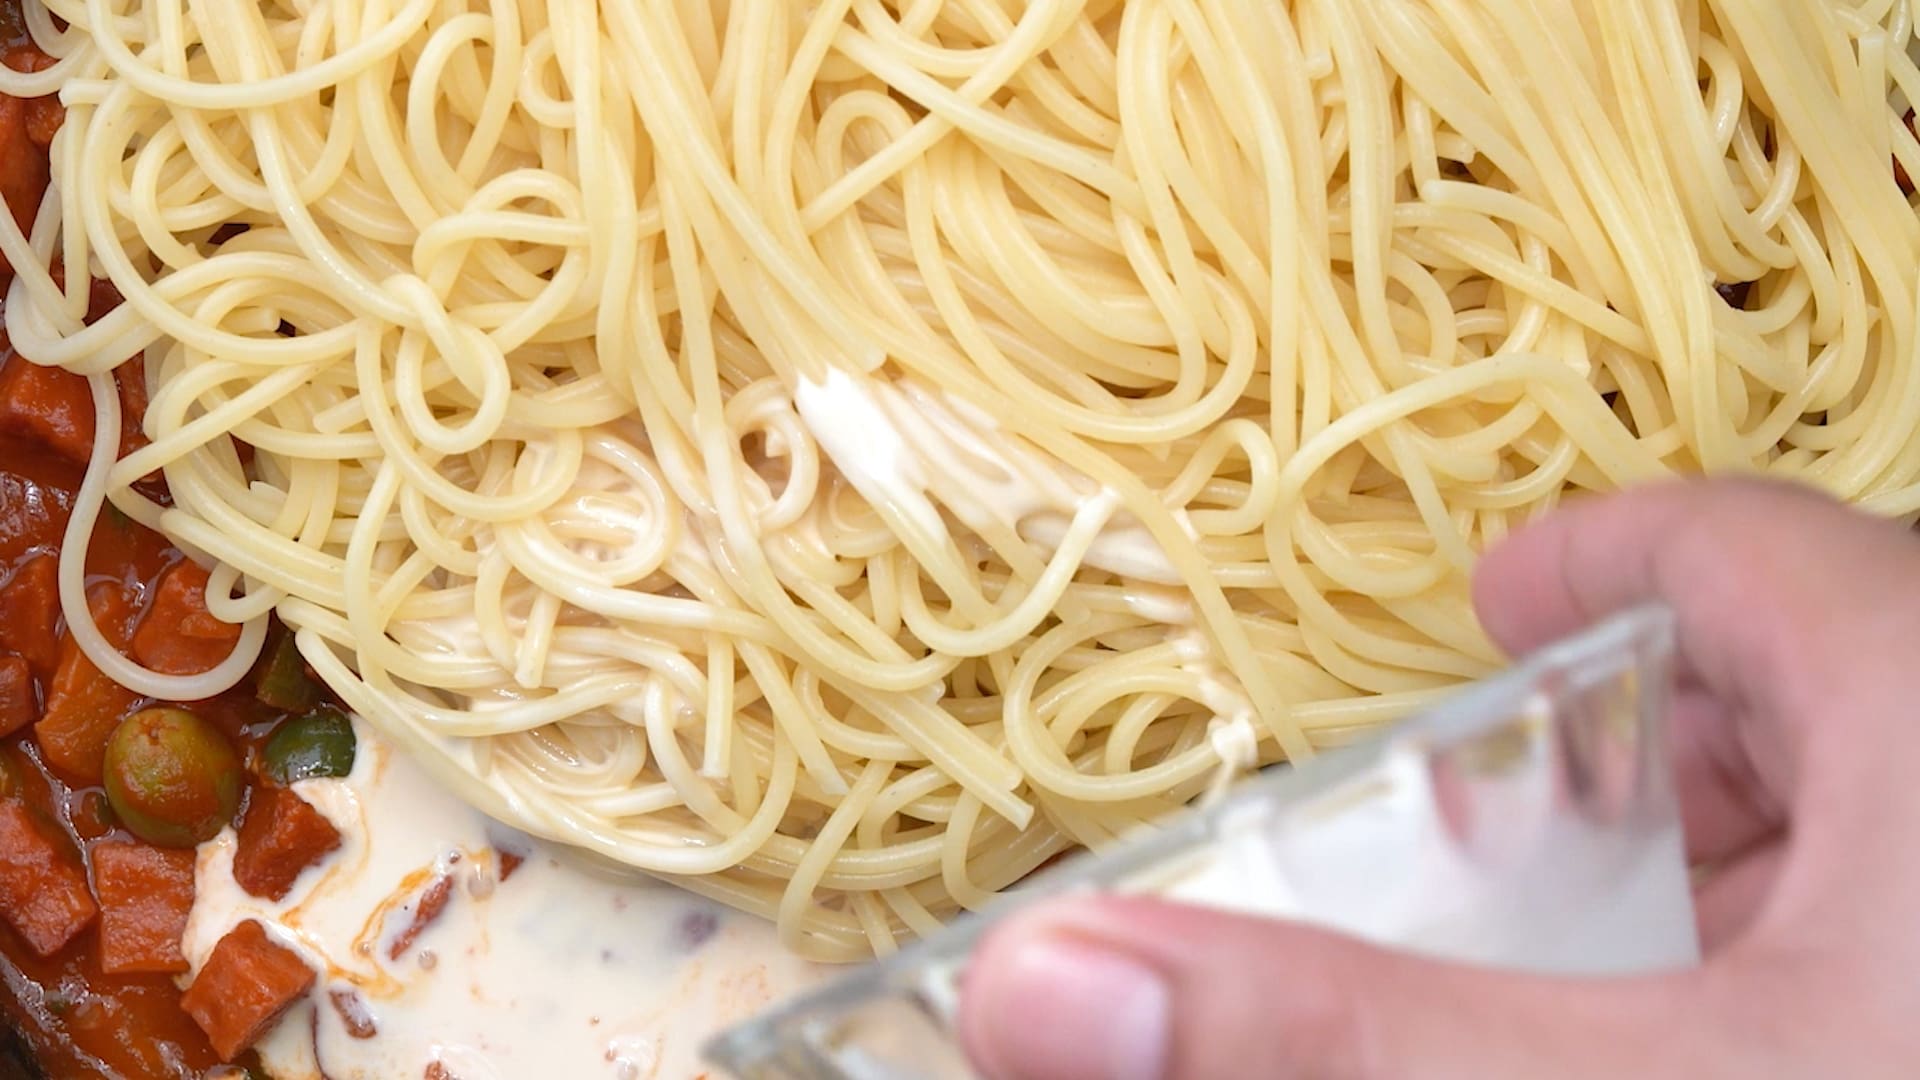 Adding milk to spaghetti in tomato sauce